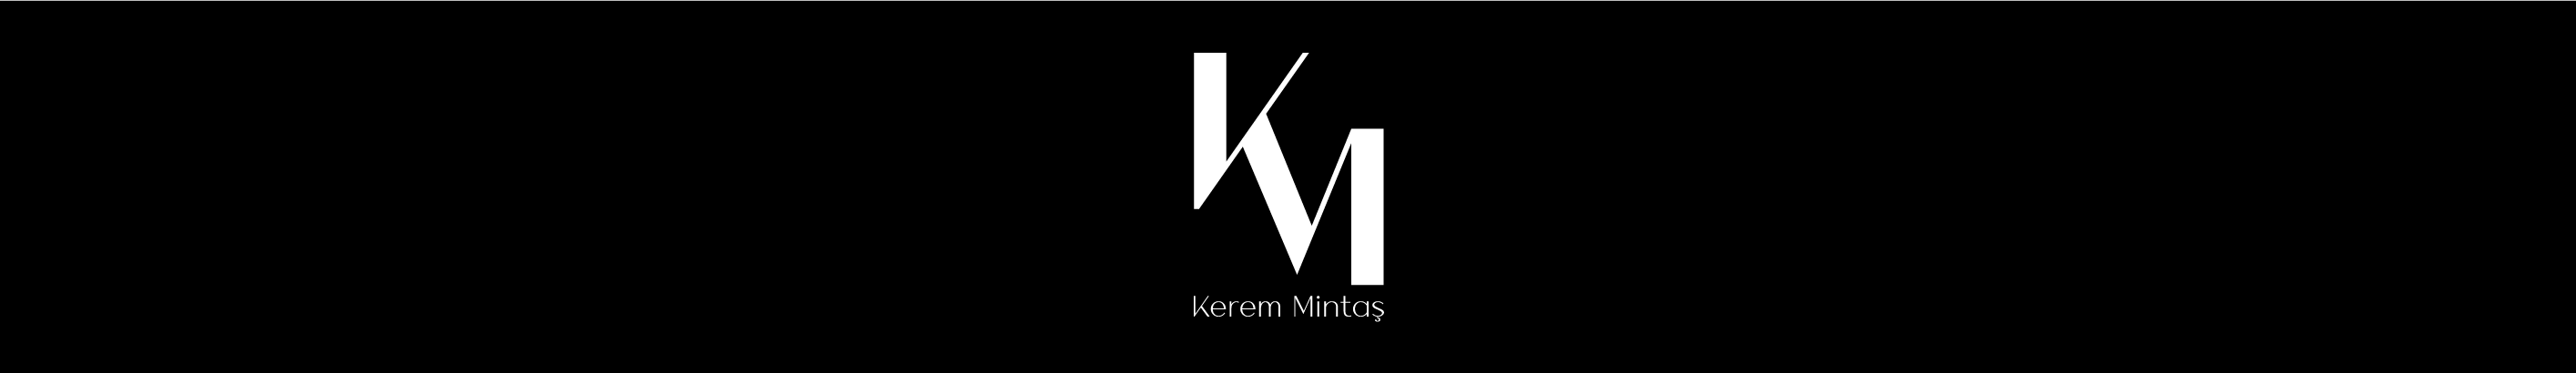 Kerem Mintaş's profile banner